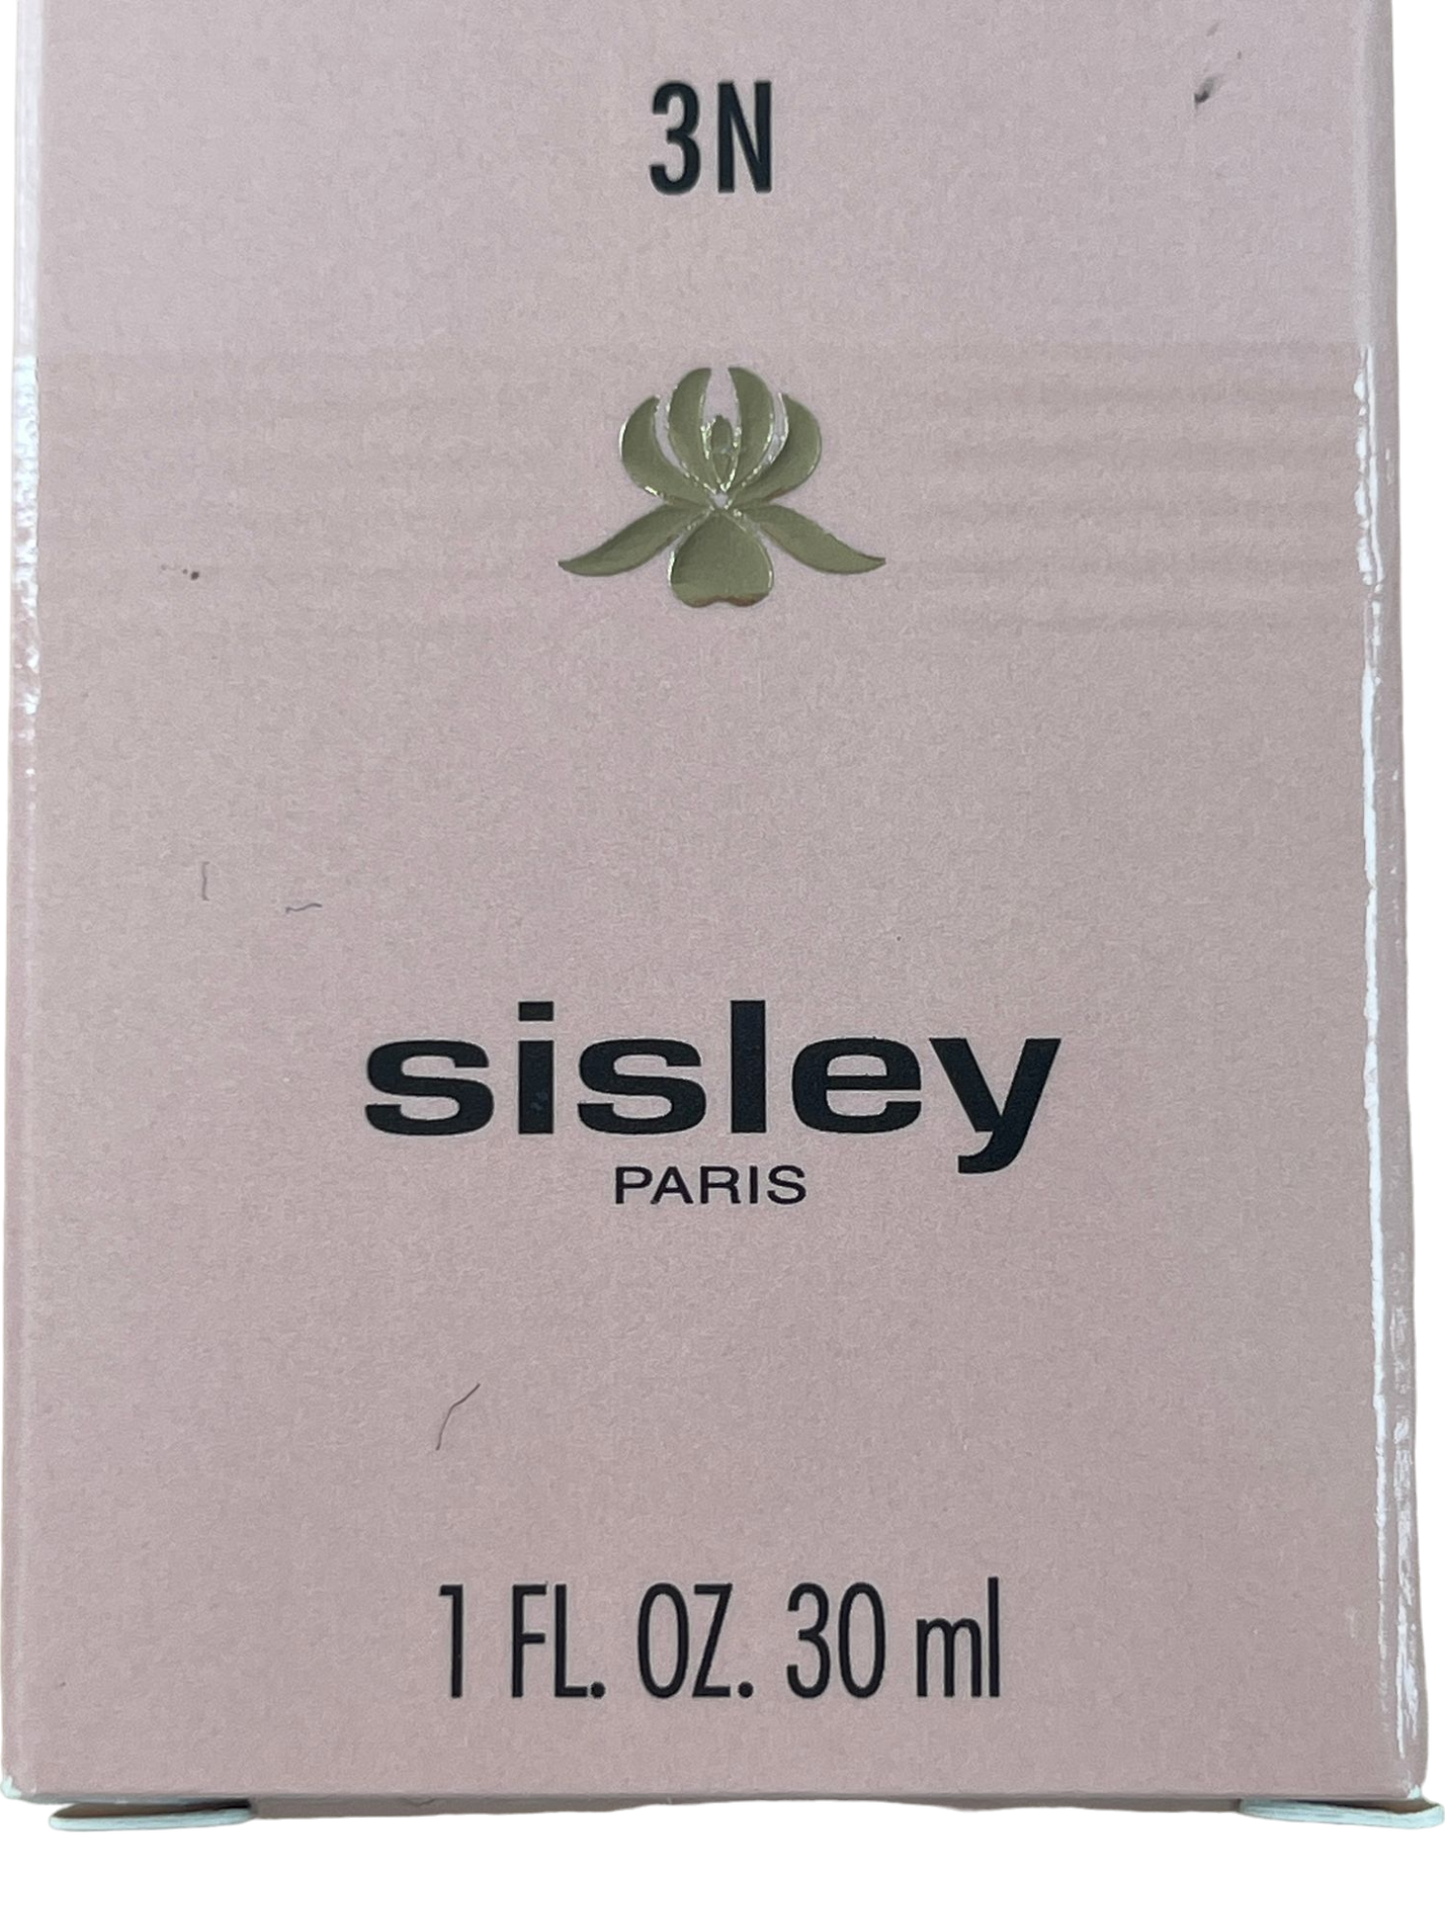 Sisley Paris Nude Phyto-Teint Perfect Foundation Sealed 30ml